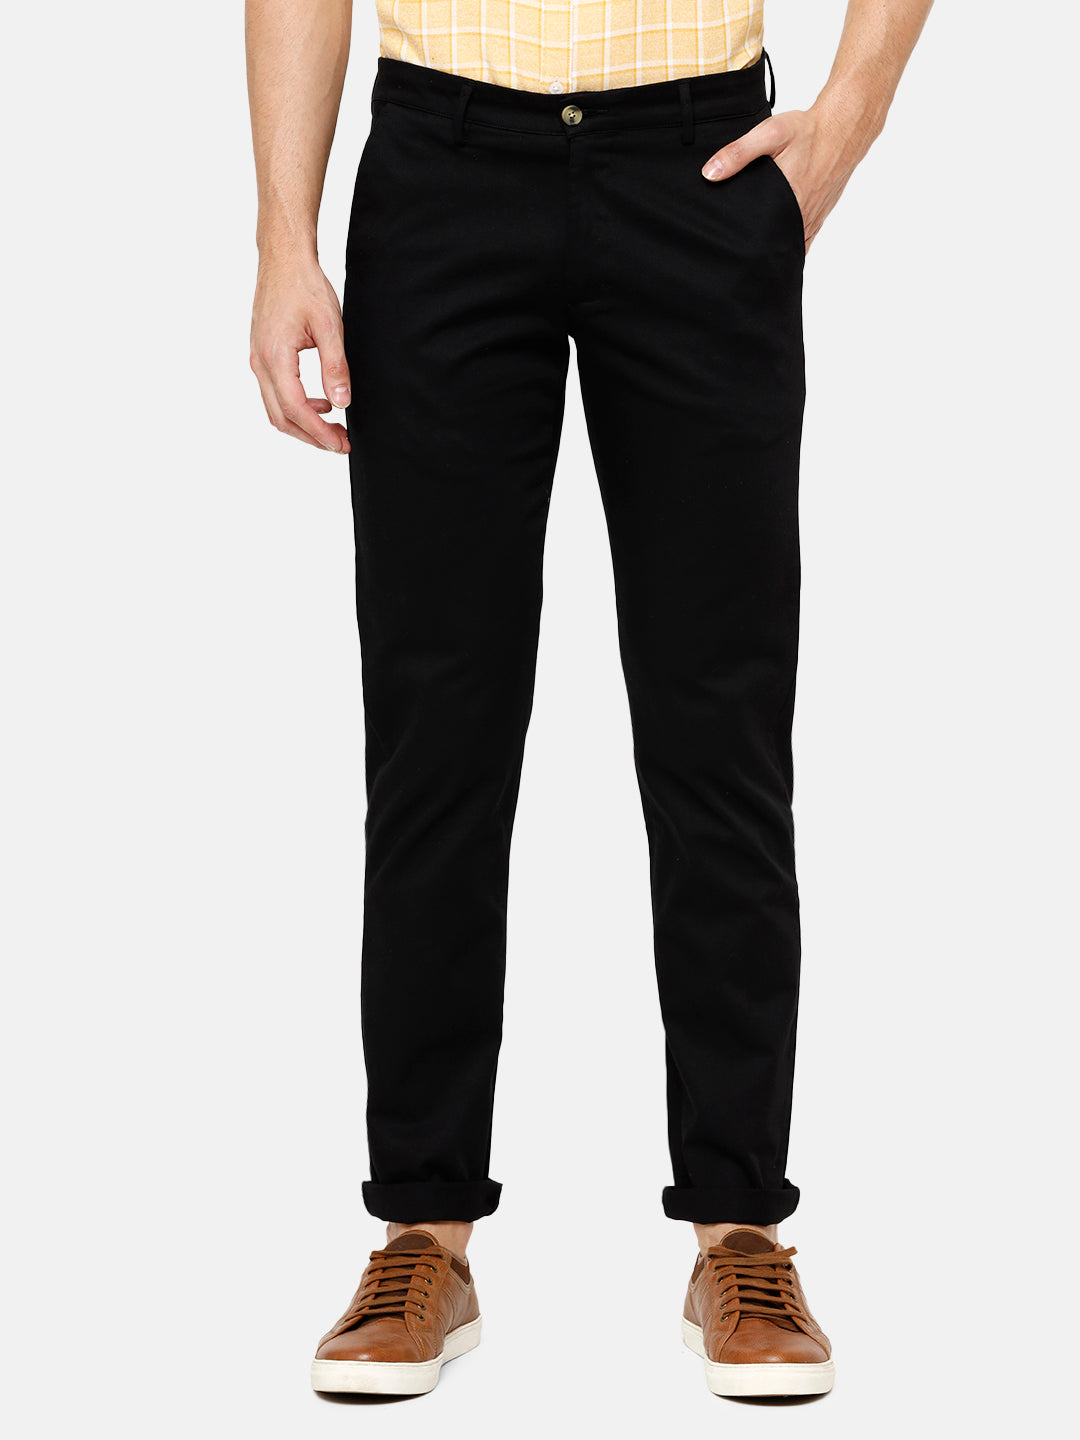 Classic Polo Men's Slim Fit Black high Density Satin Streatch Trousers - Spectra-Black